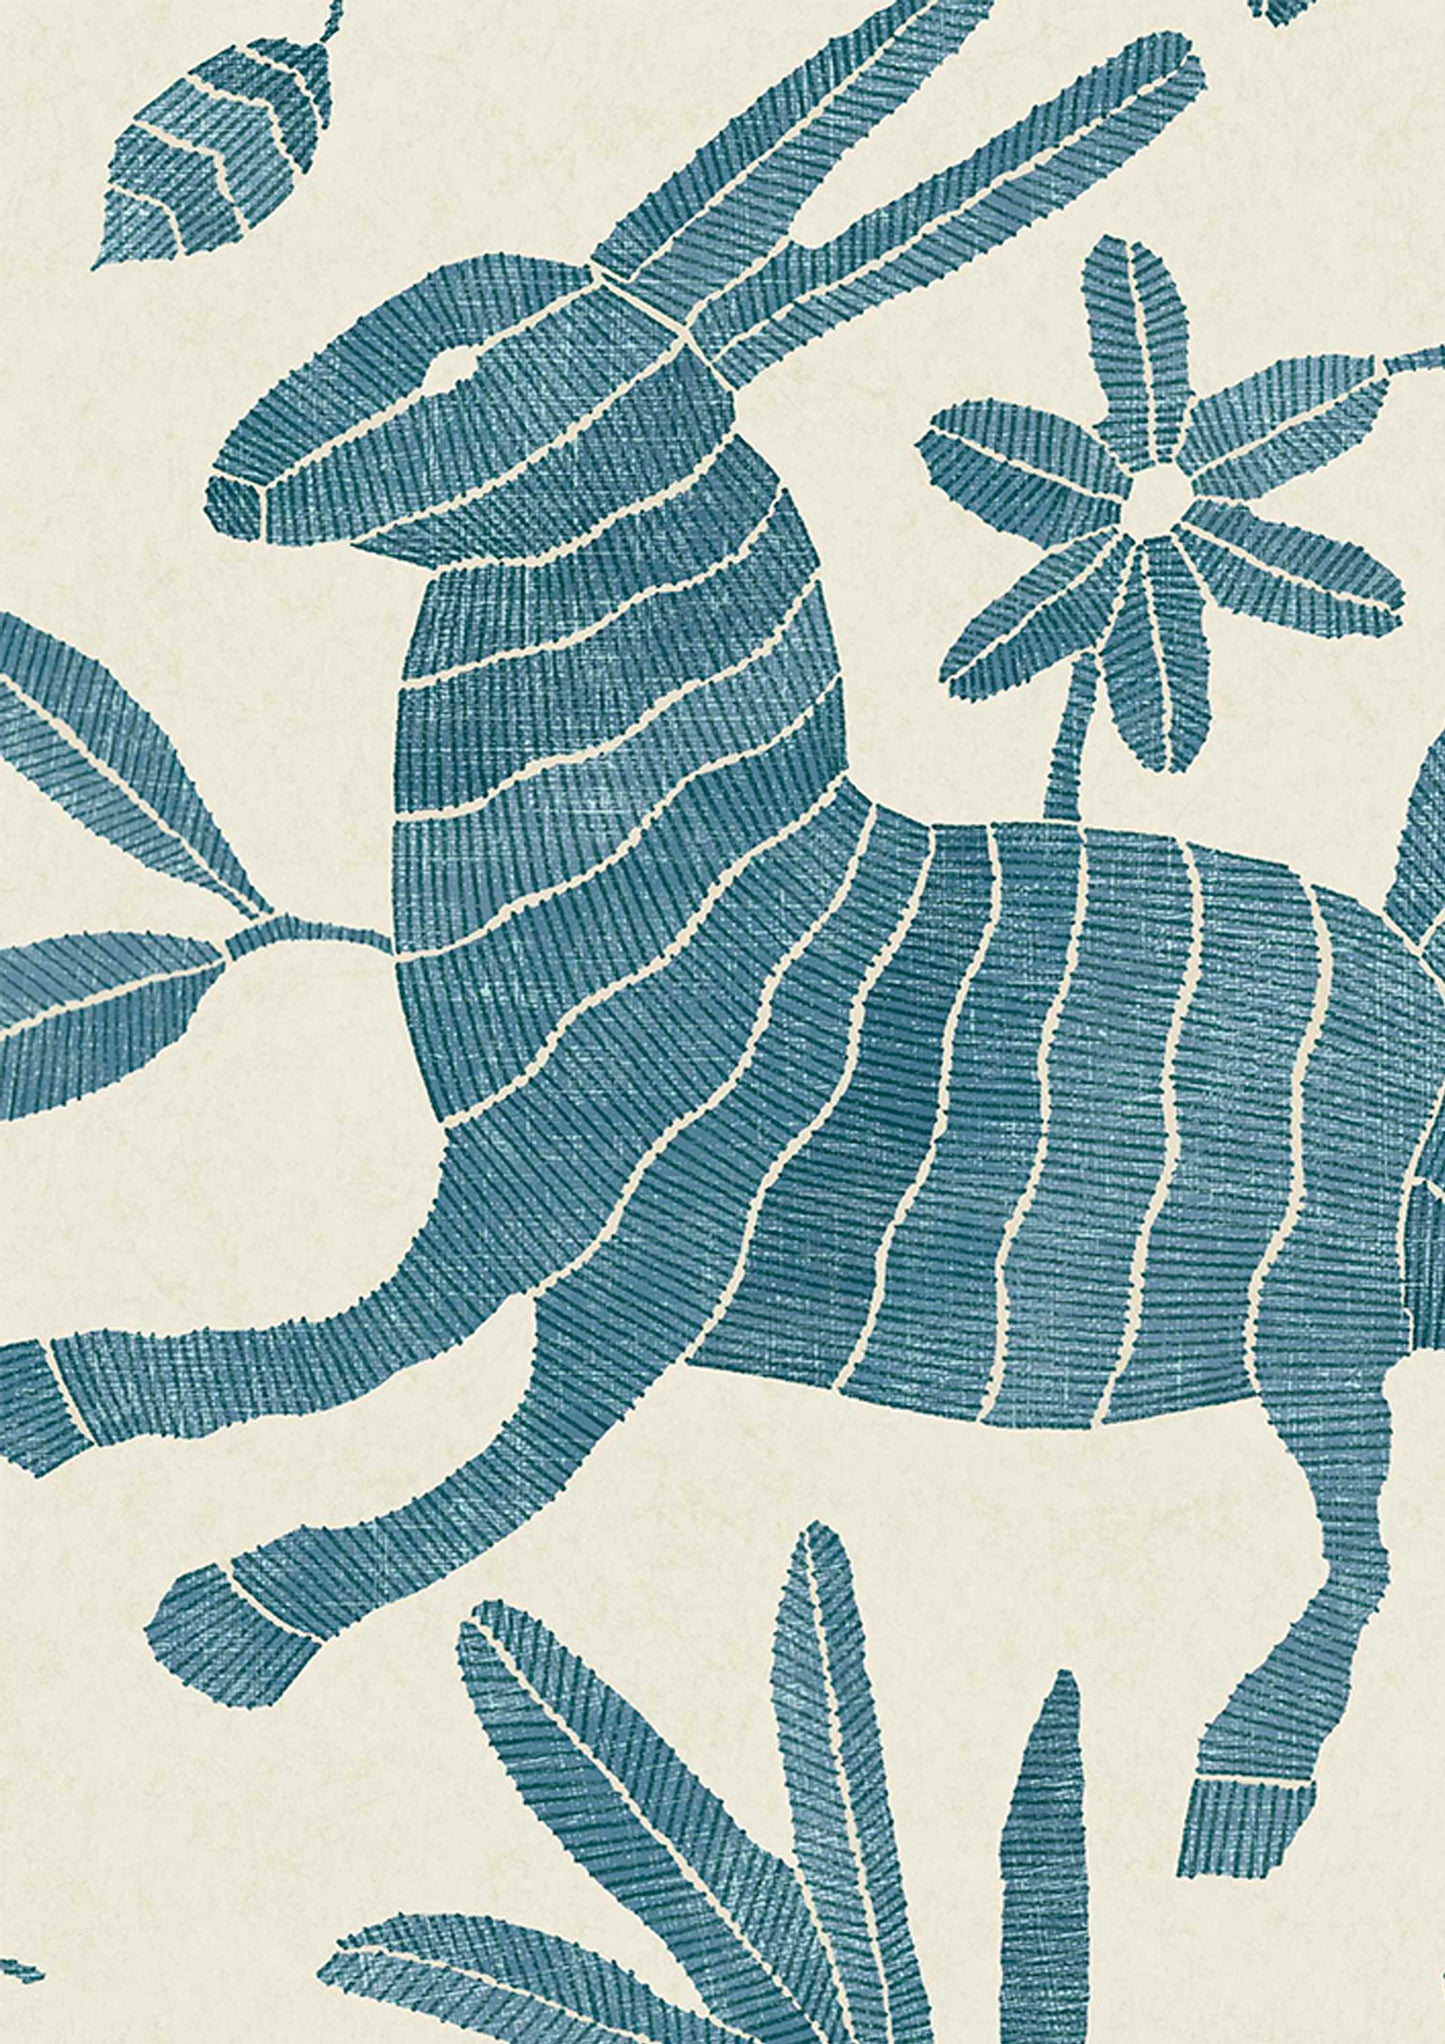 Otomi Bluebird Wallpaper - Lewis & Wood